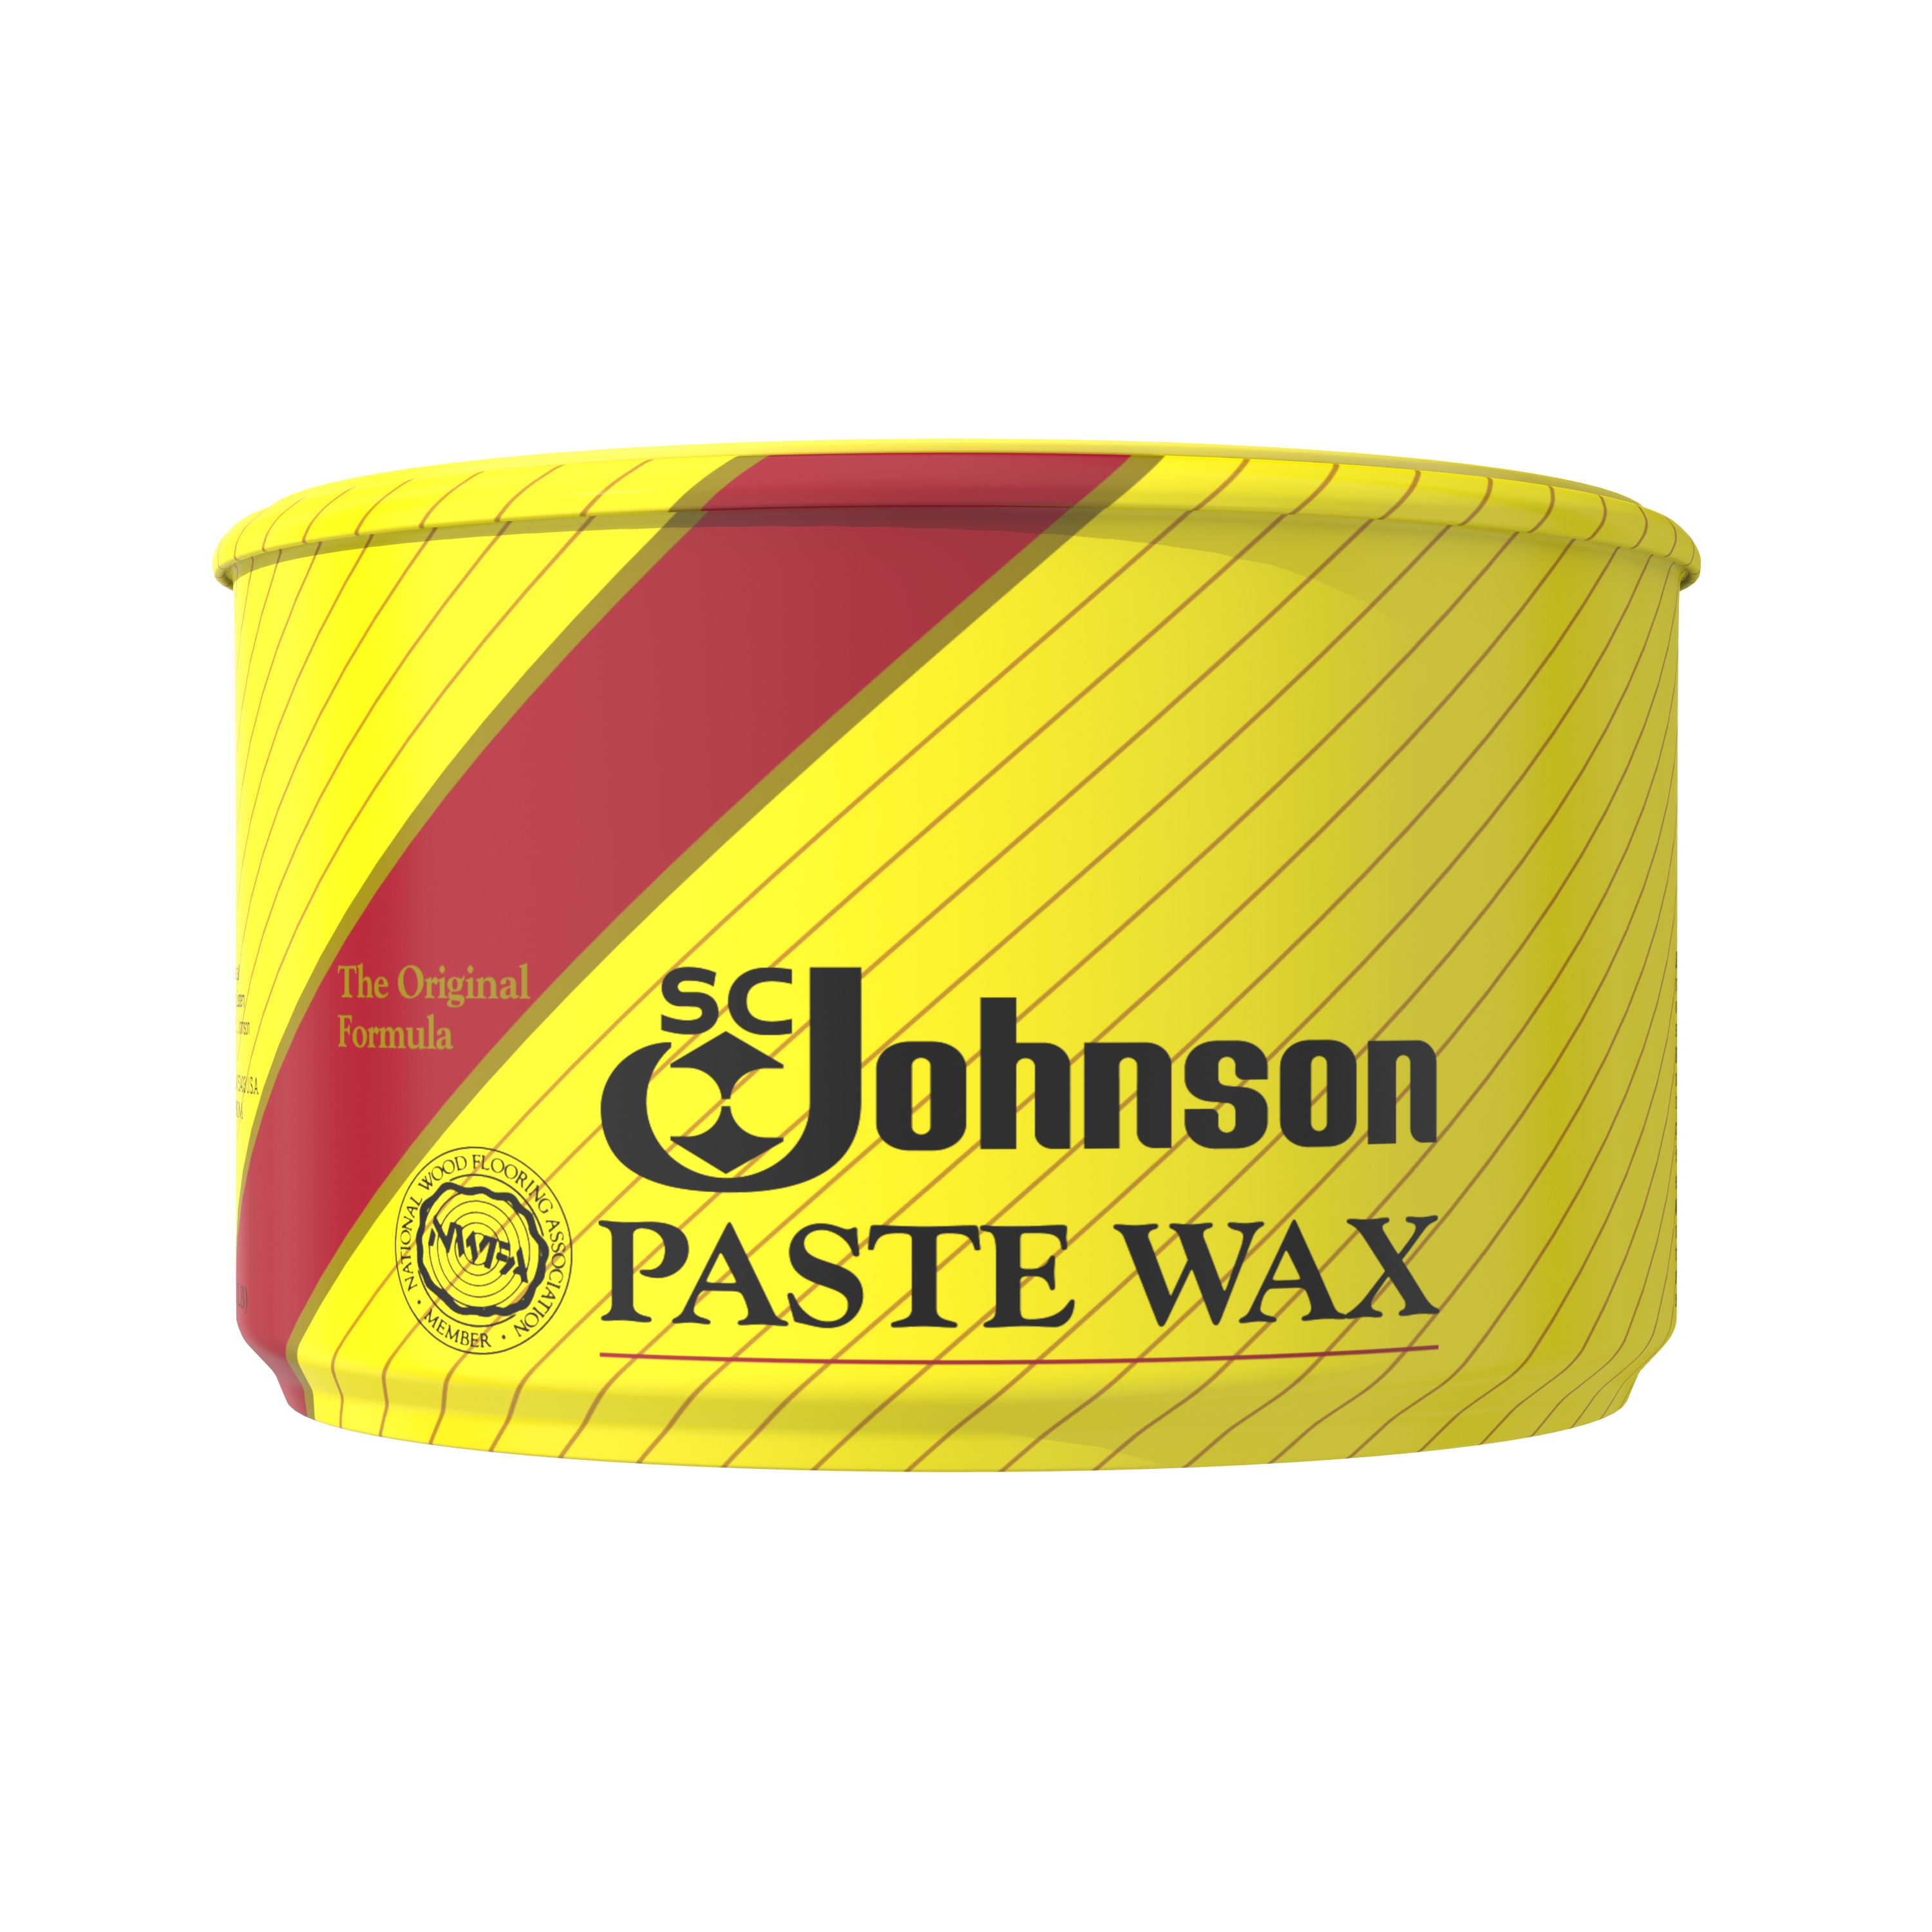 Johnson 16-oz Semi-gloss Floor Polish at